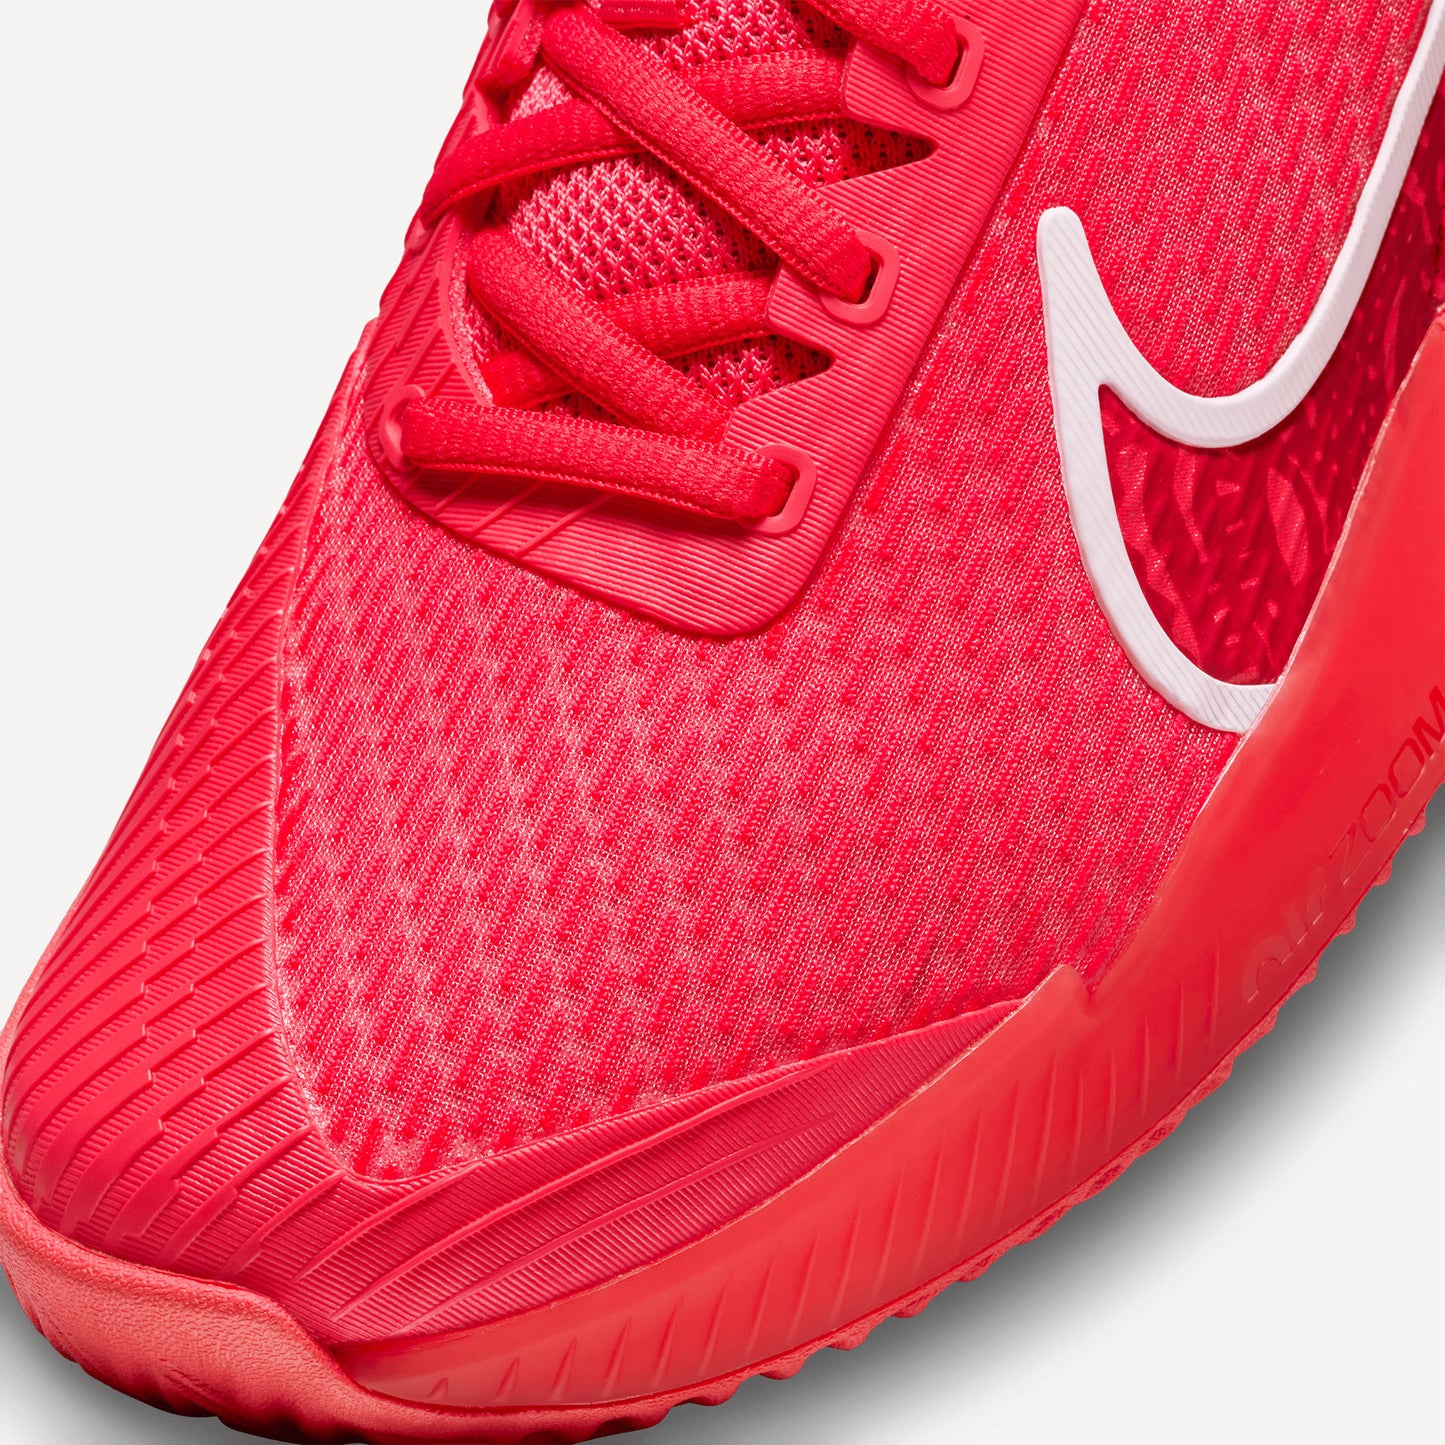 NikeCourt Air Zoom Vapor Pro 2 Men's Clay Court Tennis Shoes Red (7)